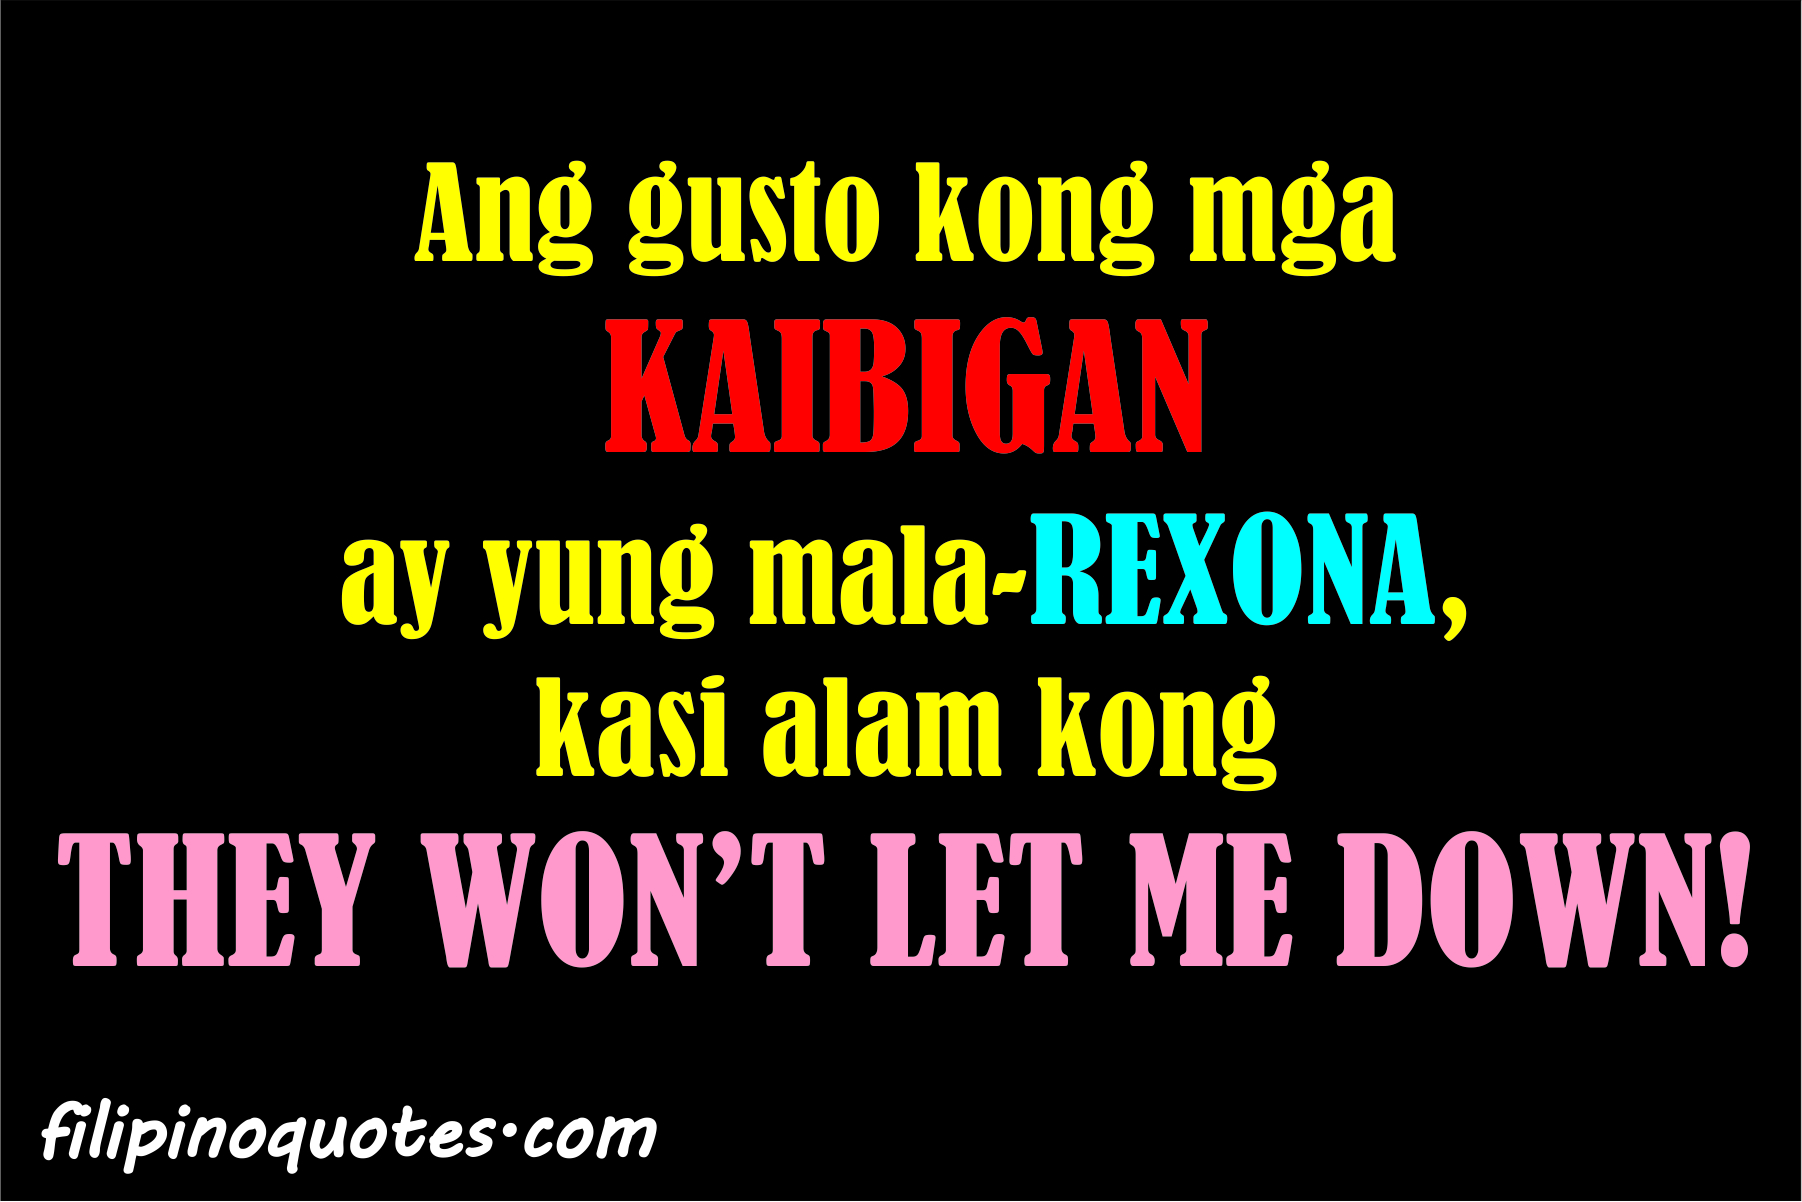 Filipino Quotes Filipino Quotes Filipino Words Pinoy Quotes - Photos